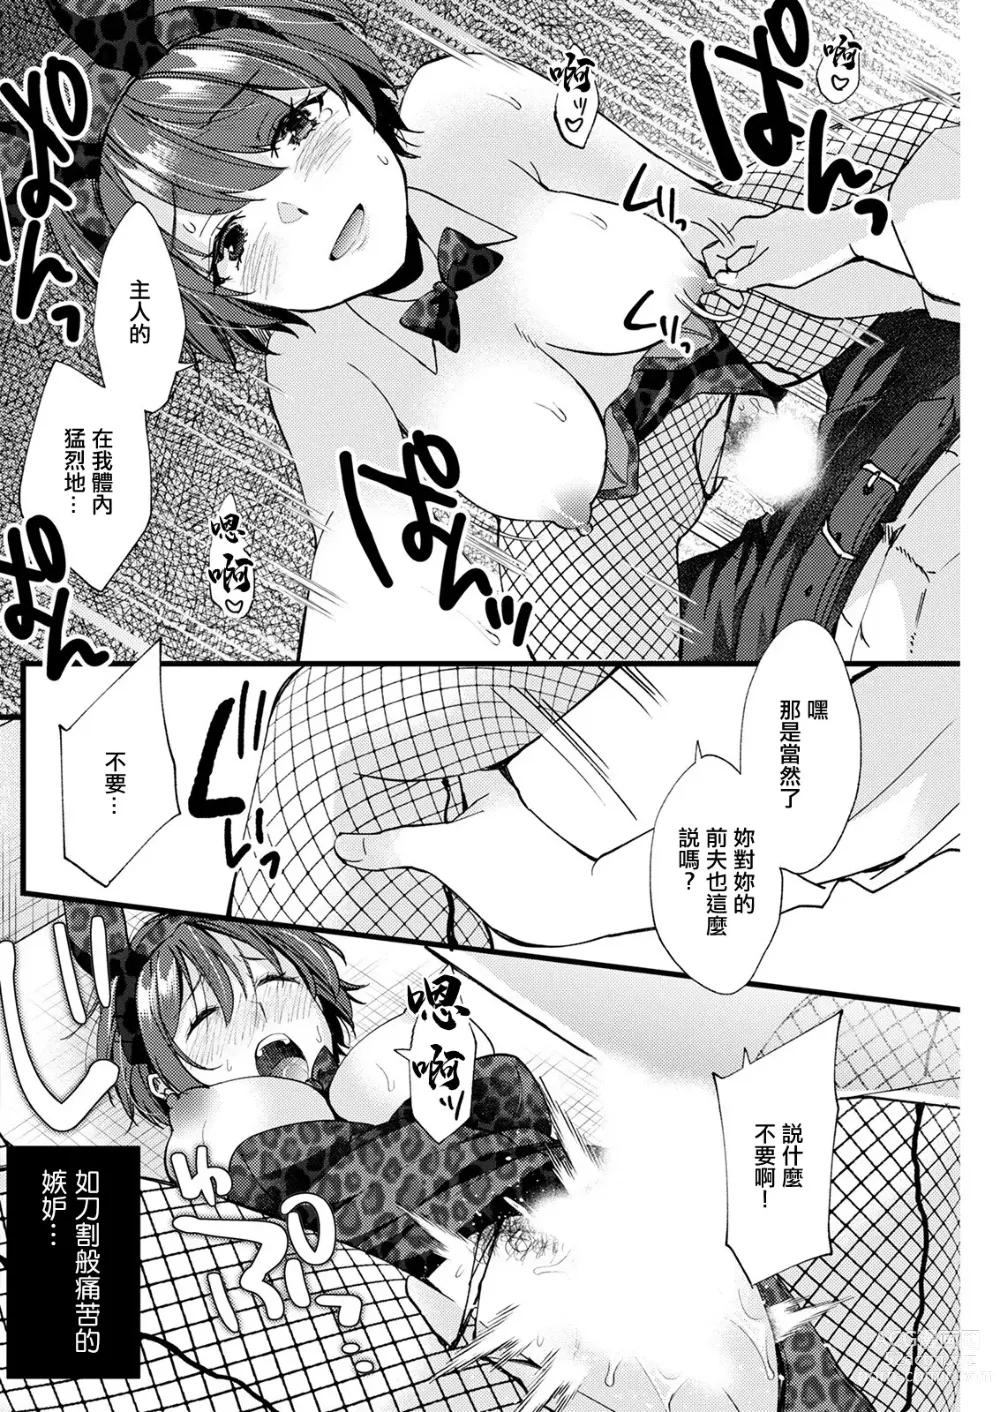 Page 12 of manga Tadaima tte Iwasete